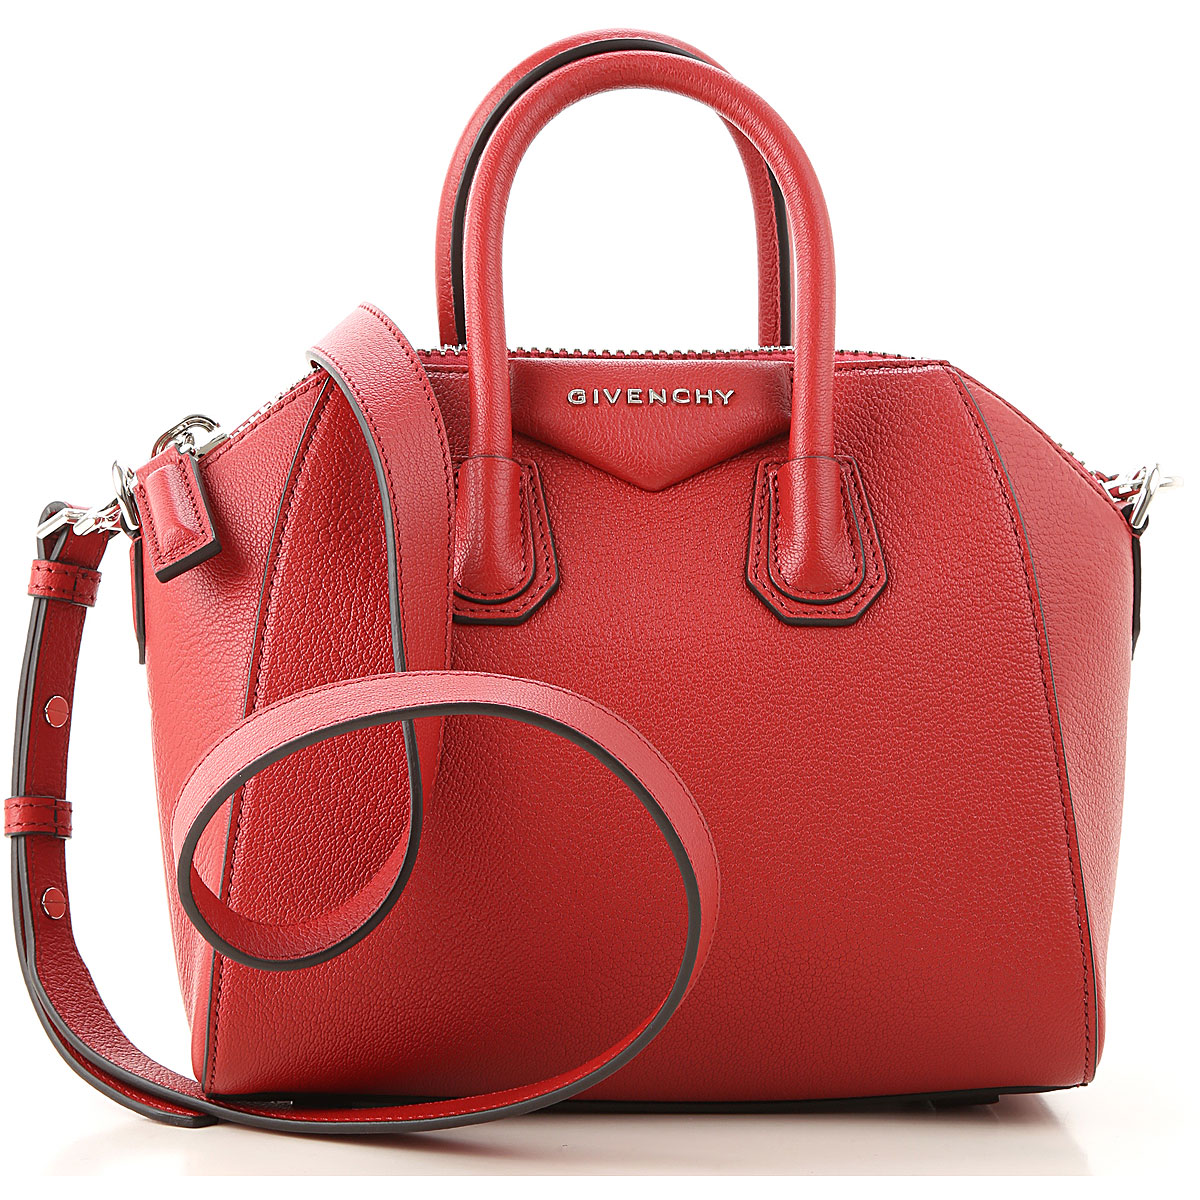 Handbags Givenchy, Style code: bb05114012-640-